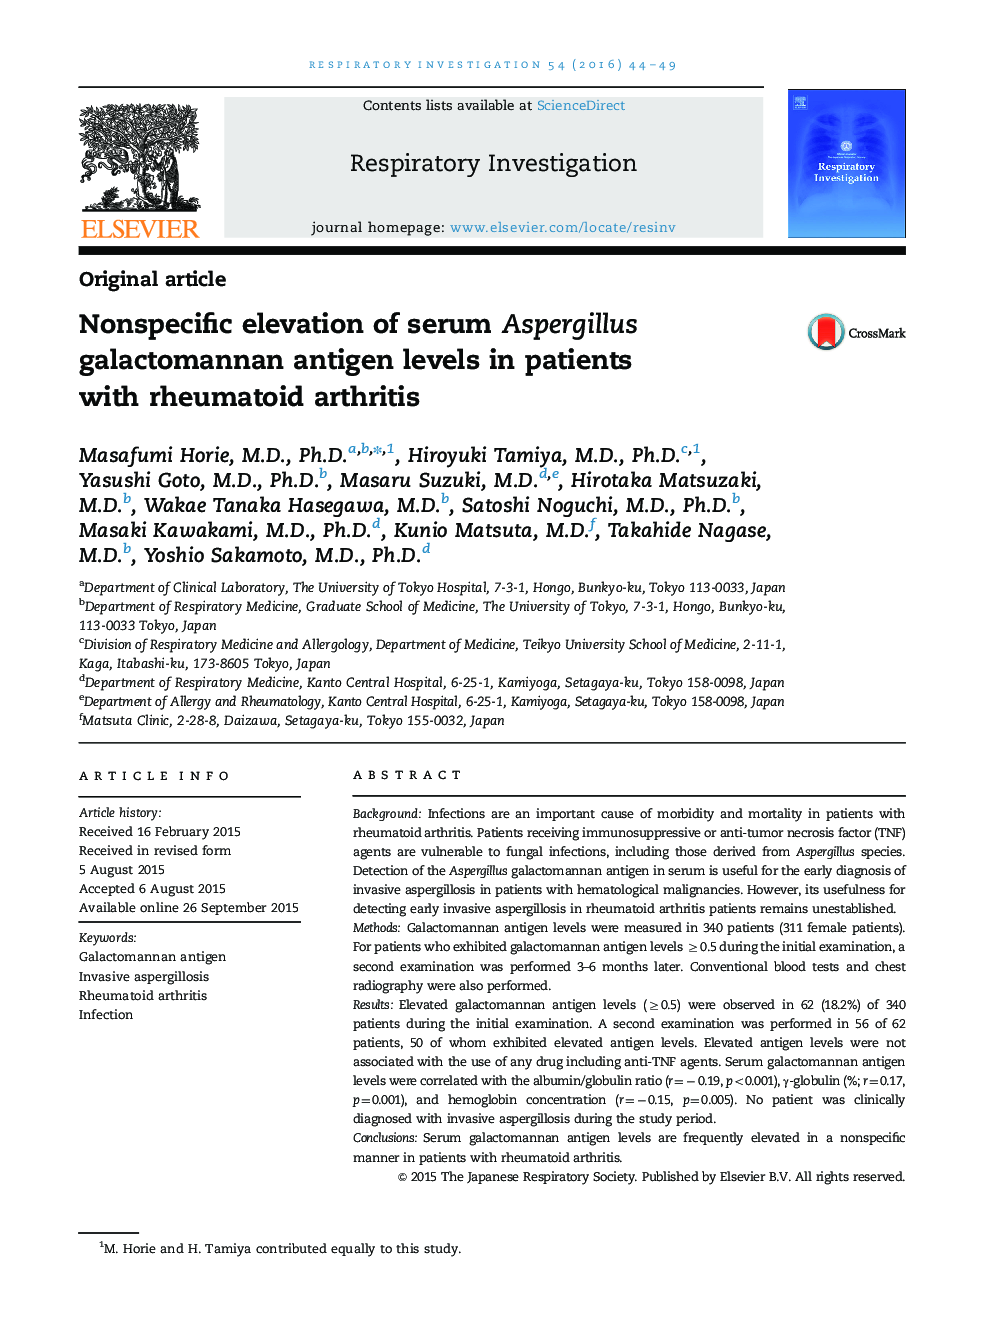 Nonspecific elevation of serum Aspergillus galactomannan antigen levels in patients with rheumatoid arthritis